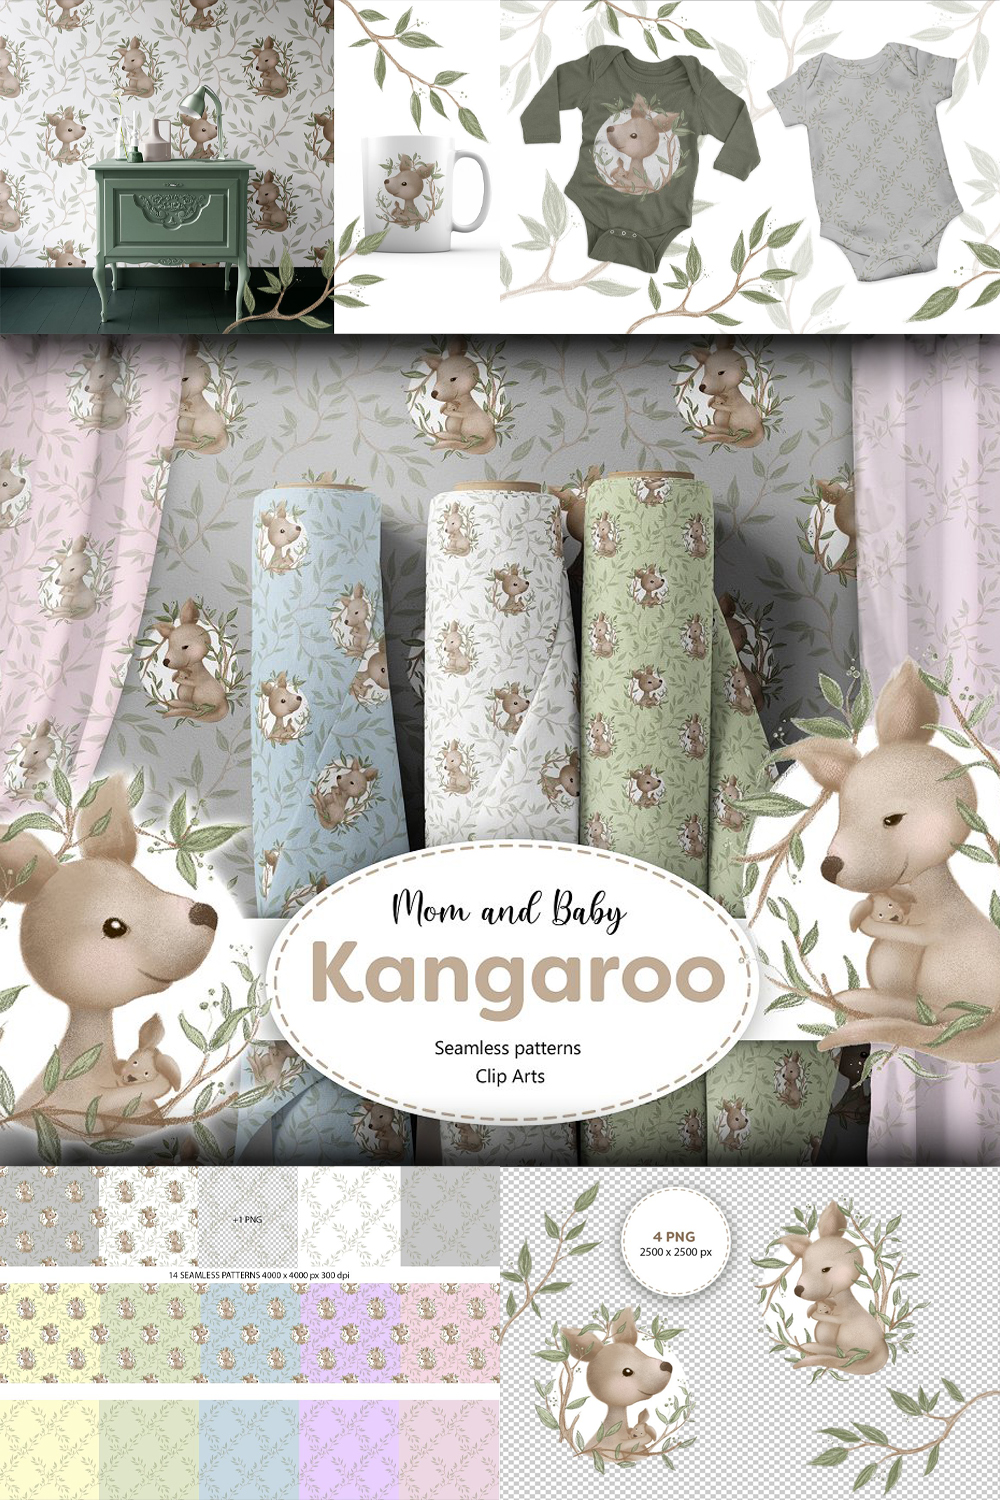 Kangaroo Seamless Patterns Clipart pinterest image.